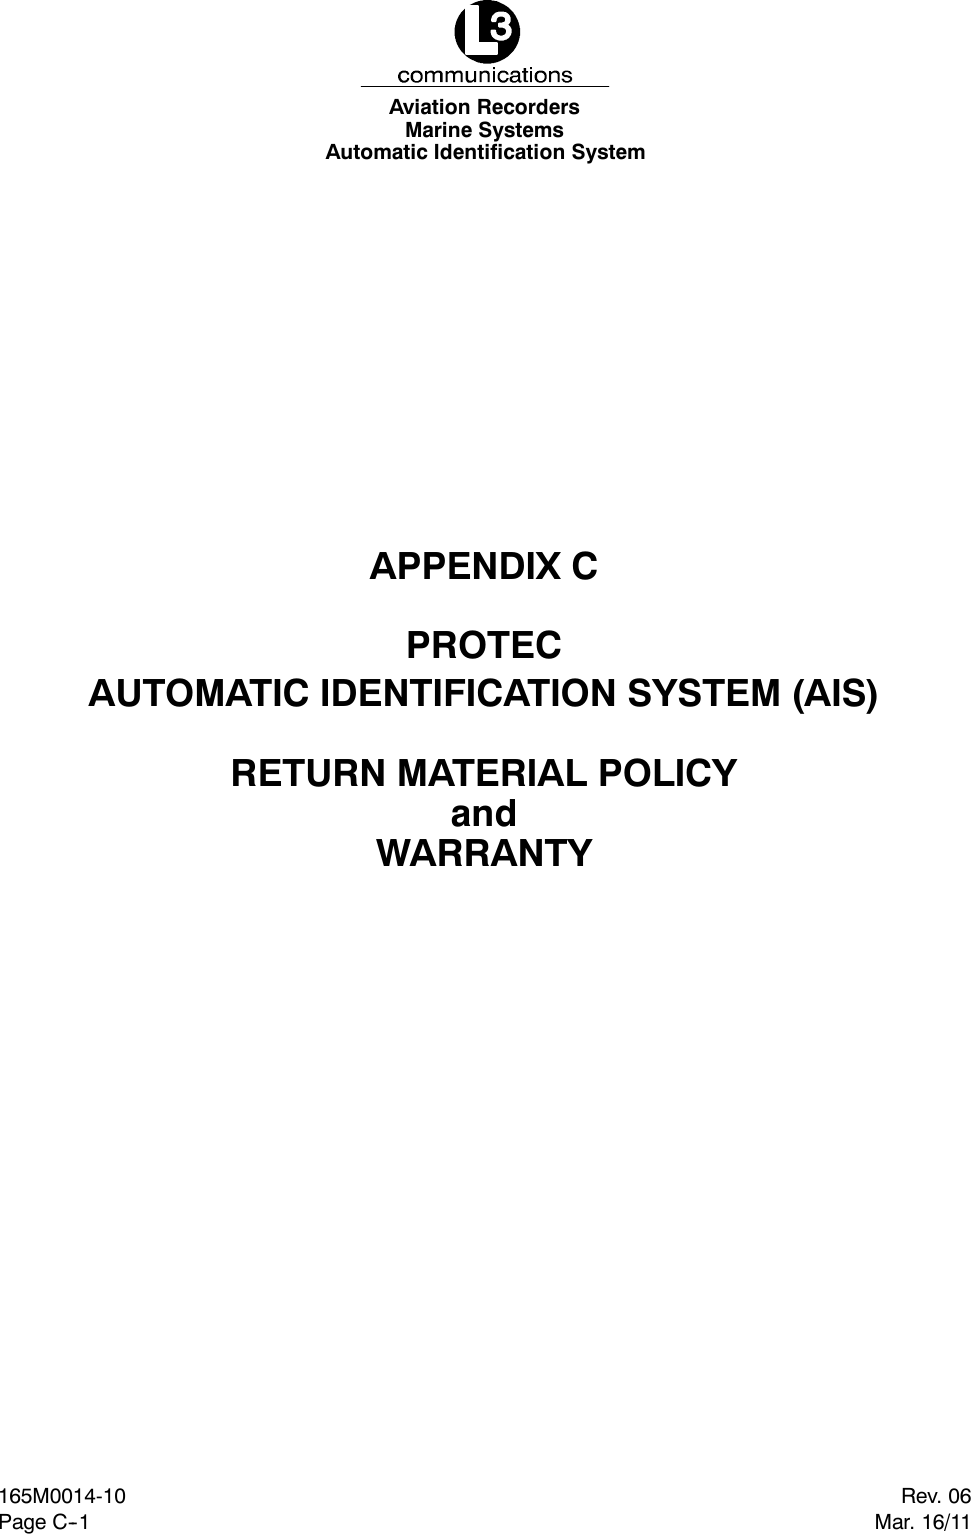 Marine SystemsAviation RecordersAutomatic Identification SystemPage C--1Rev. 06165M0014-10Mar. 16/11APPENDIX CPROTECAUTOMATIC IDENTIFICATION SYSTEM (AIS)RETURN MATERIAL POLICYandWARRANTY